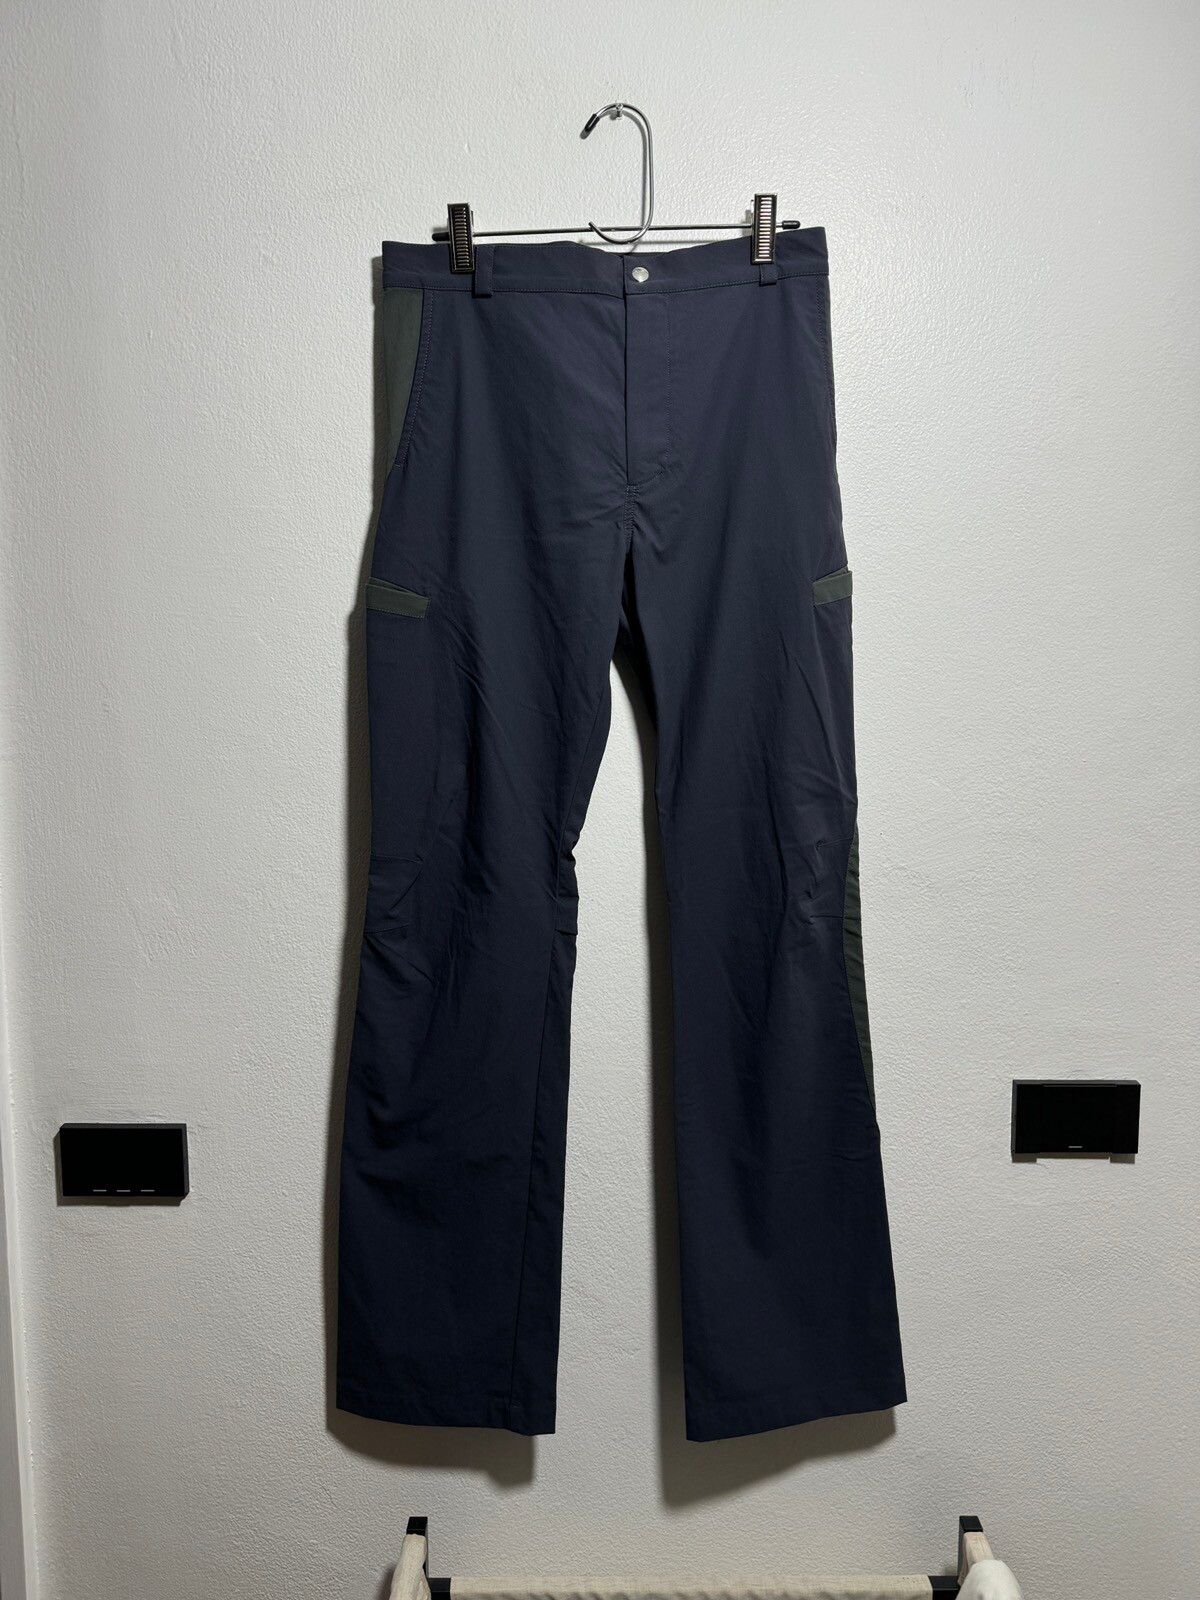 Kiko Kostadinov SS23 Kobe Uniform Trousers | Grailed